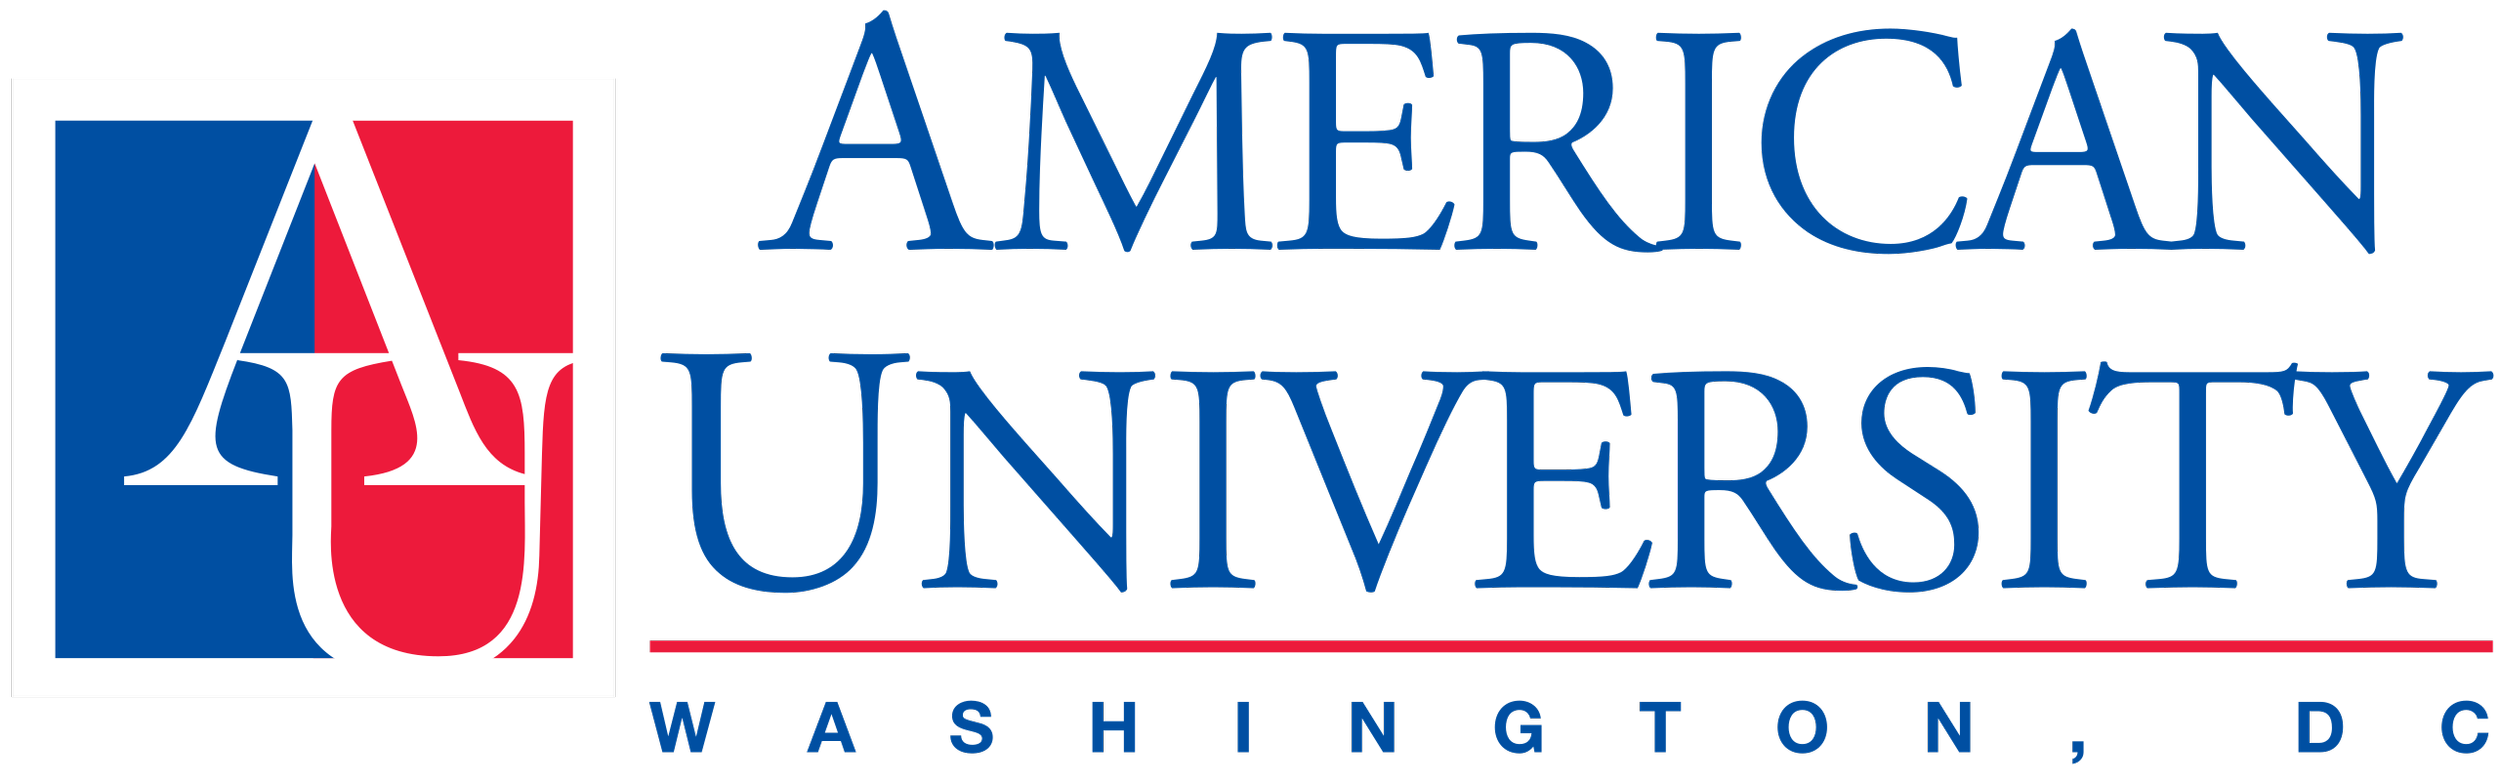 American_University_logo_svg.png